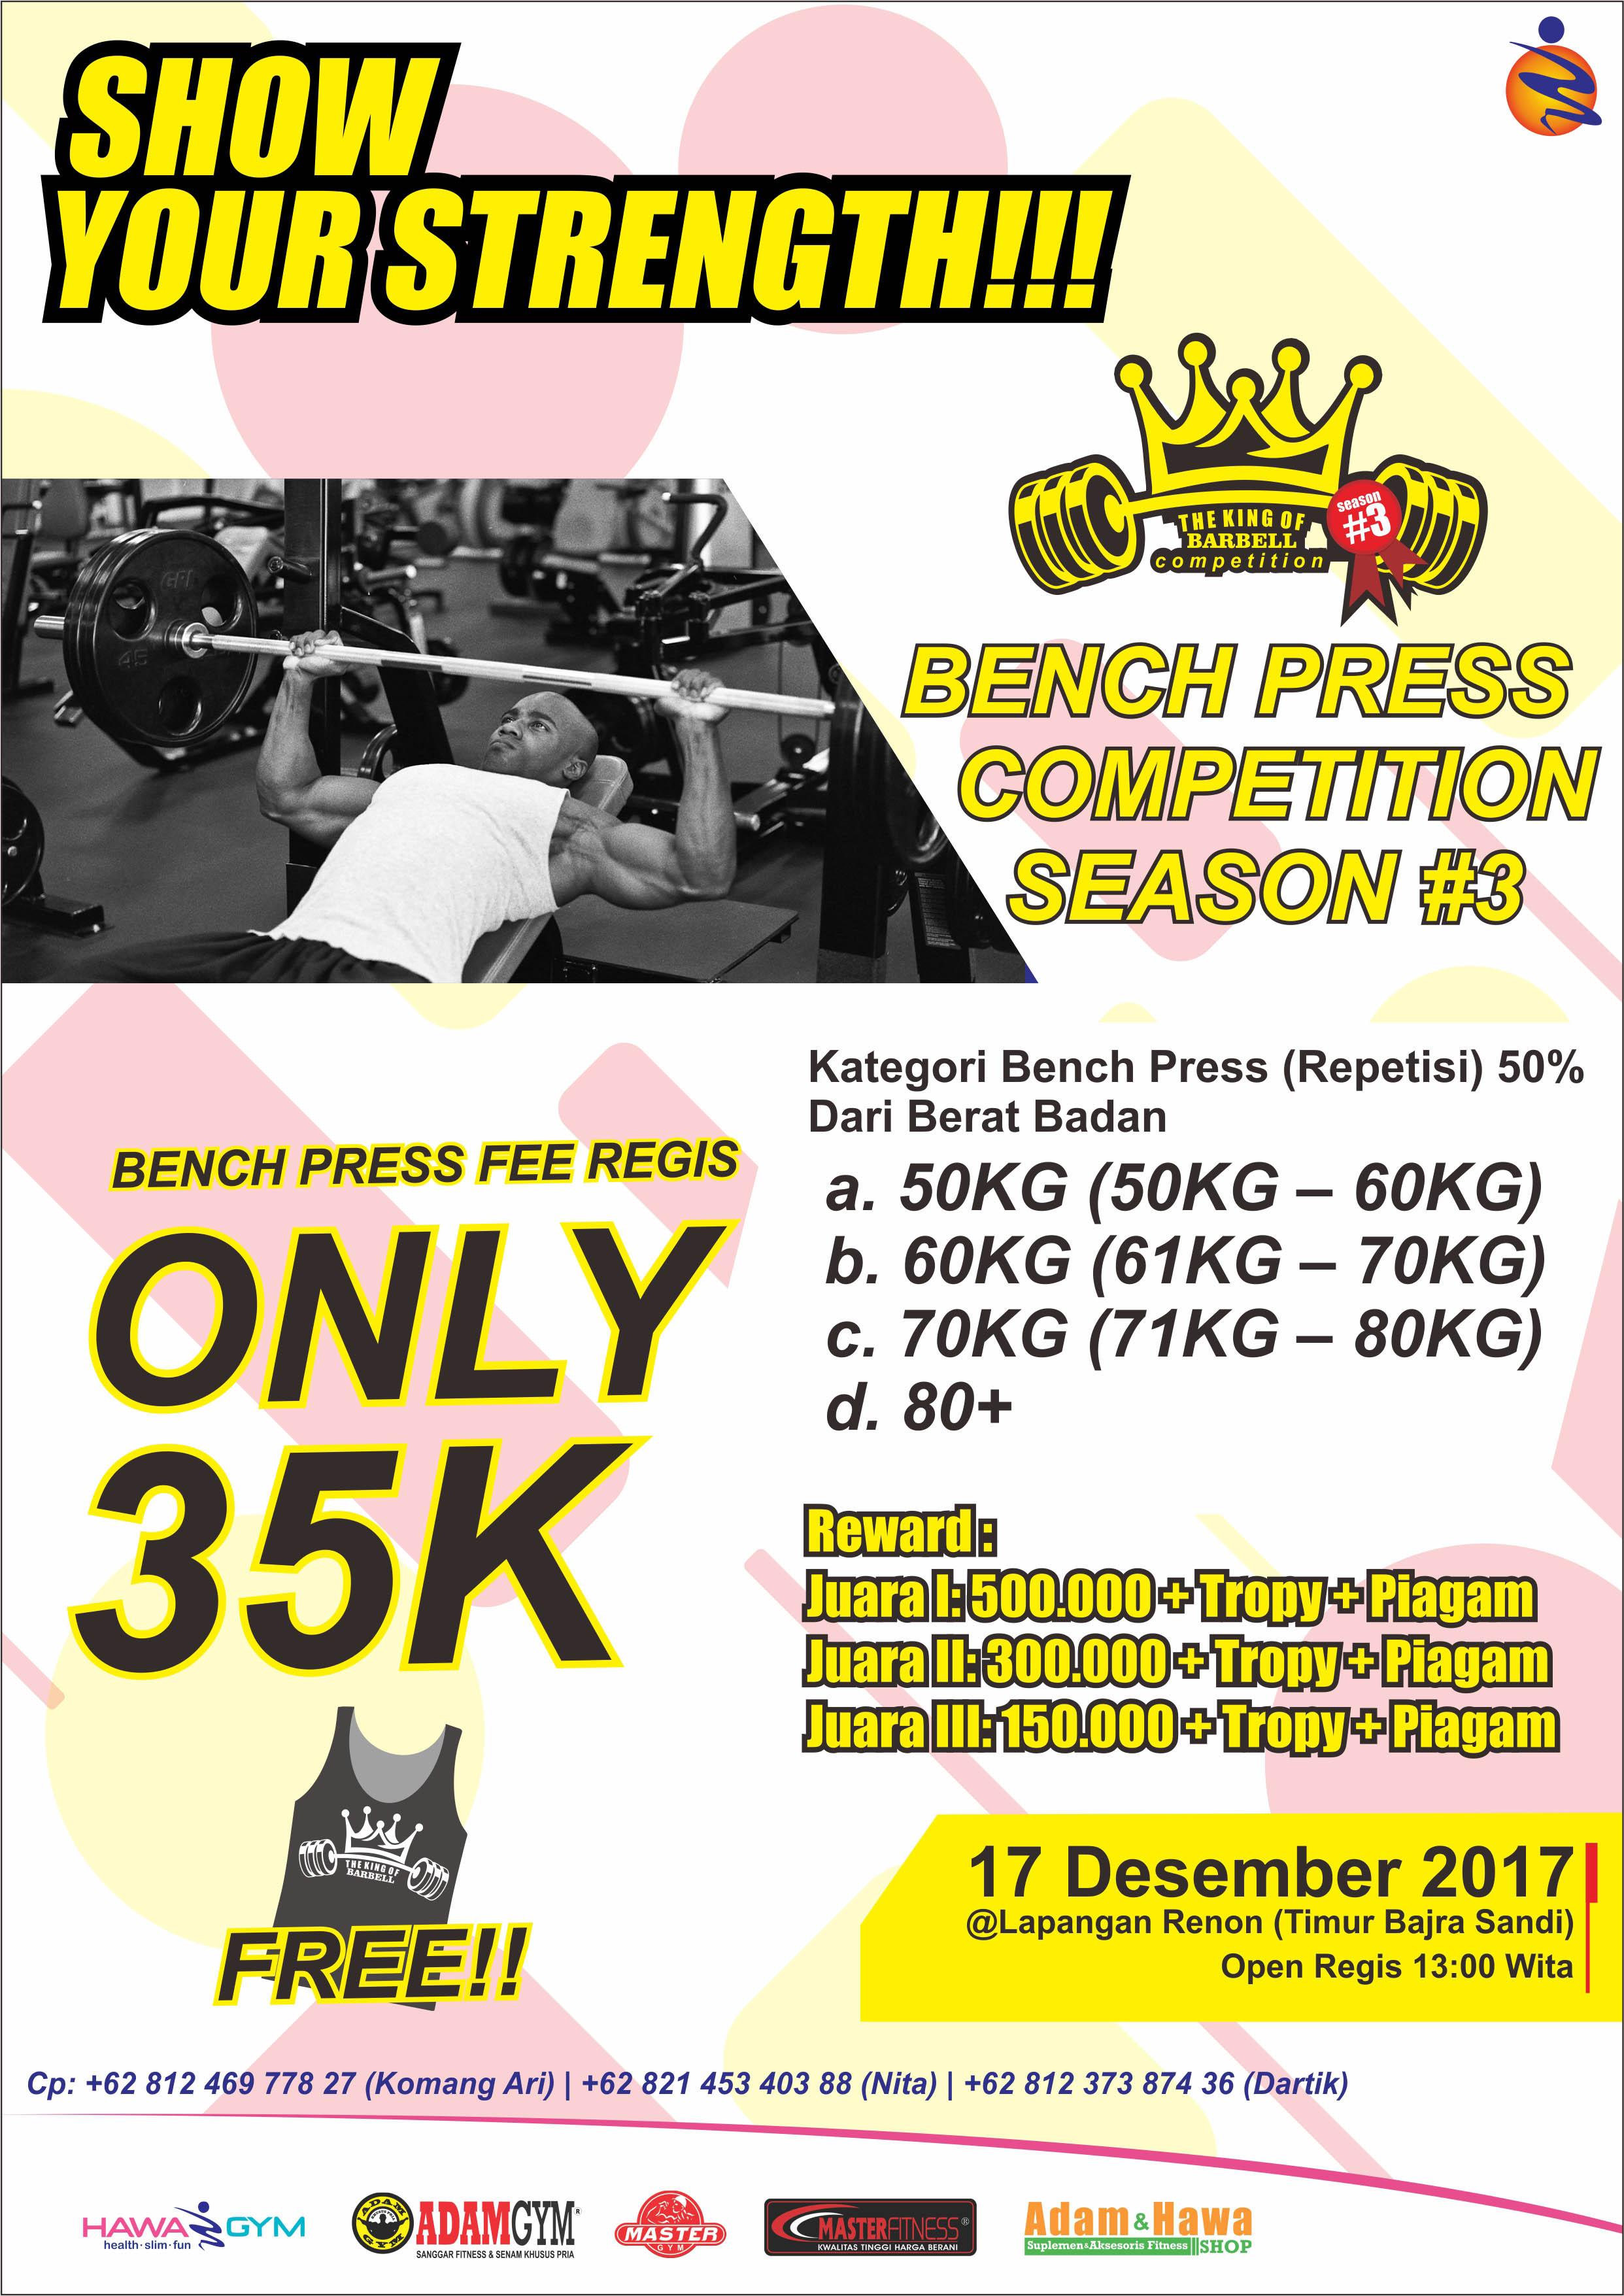 benchpress-competitons-season-3-adam-gym-dan-master-gym-indonesia